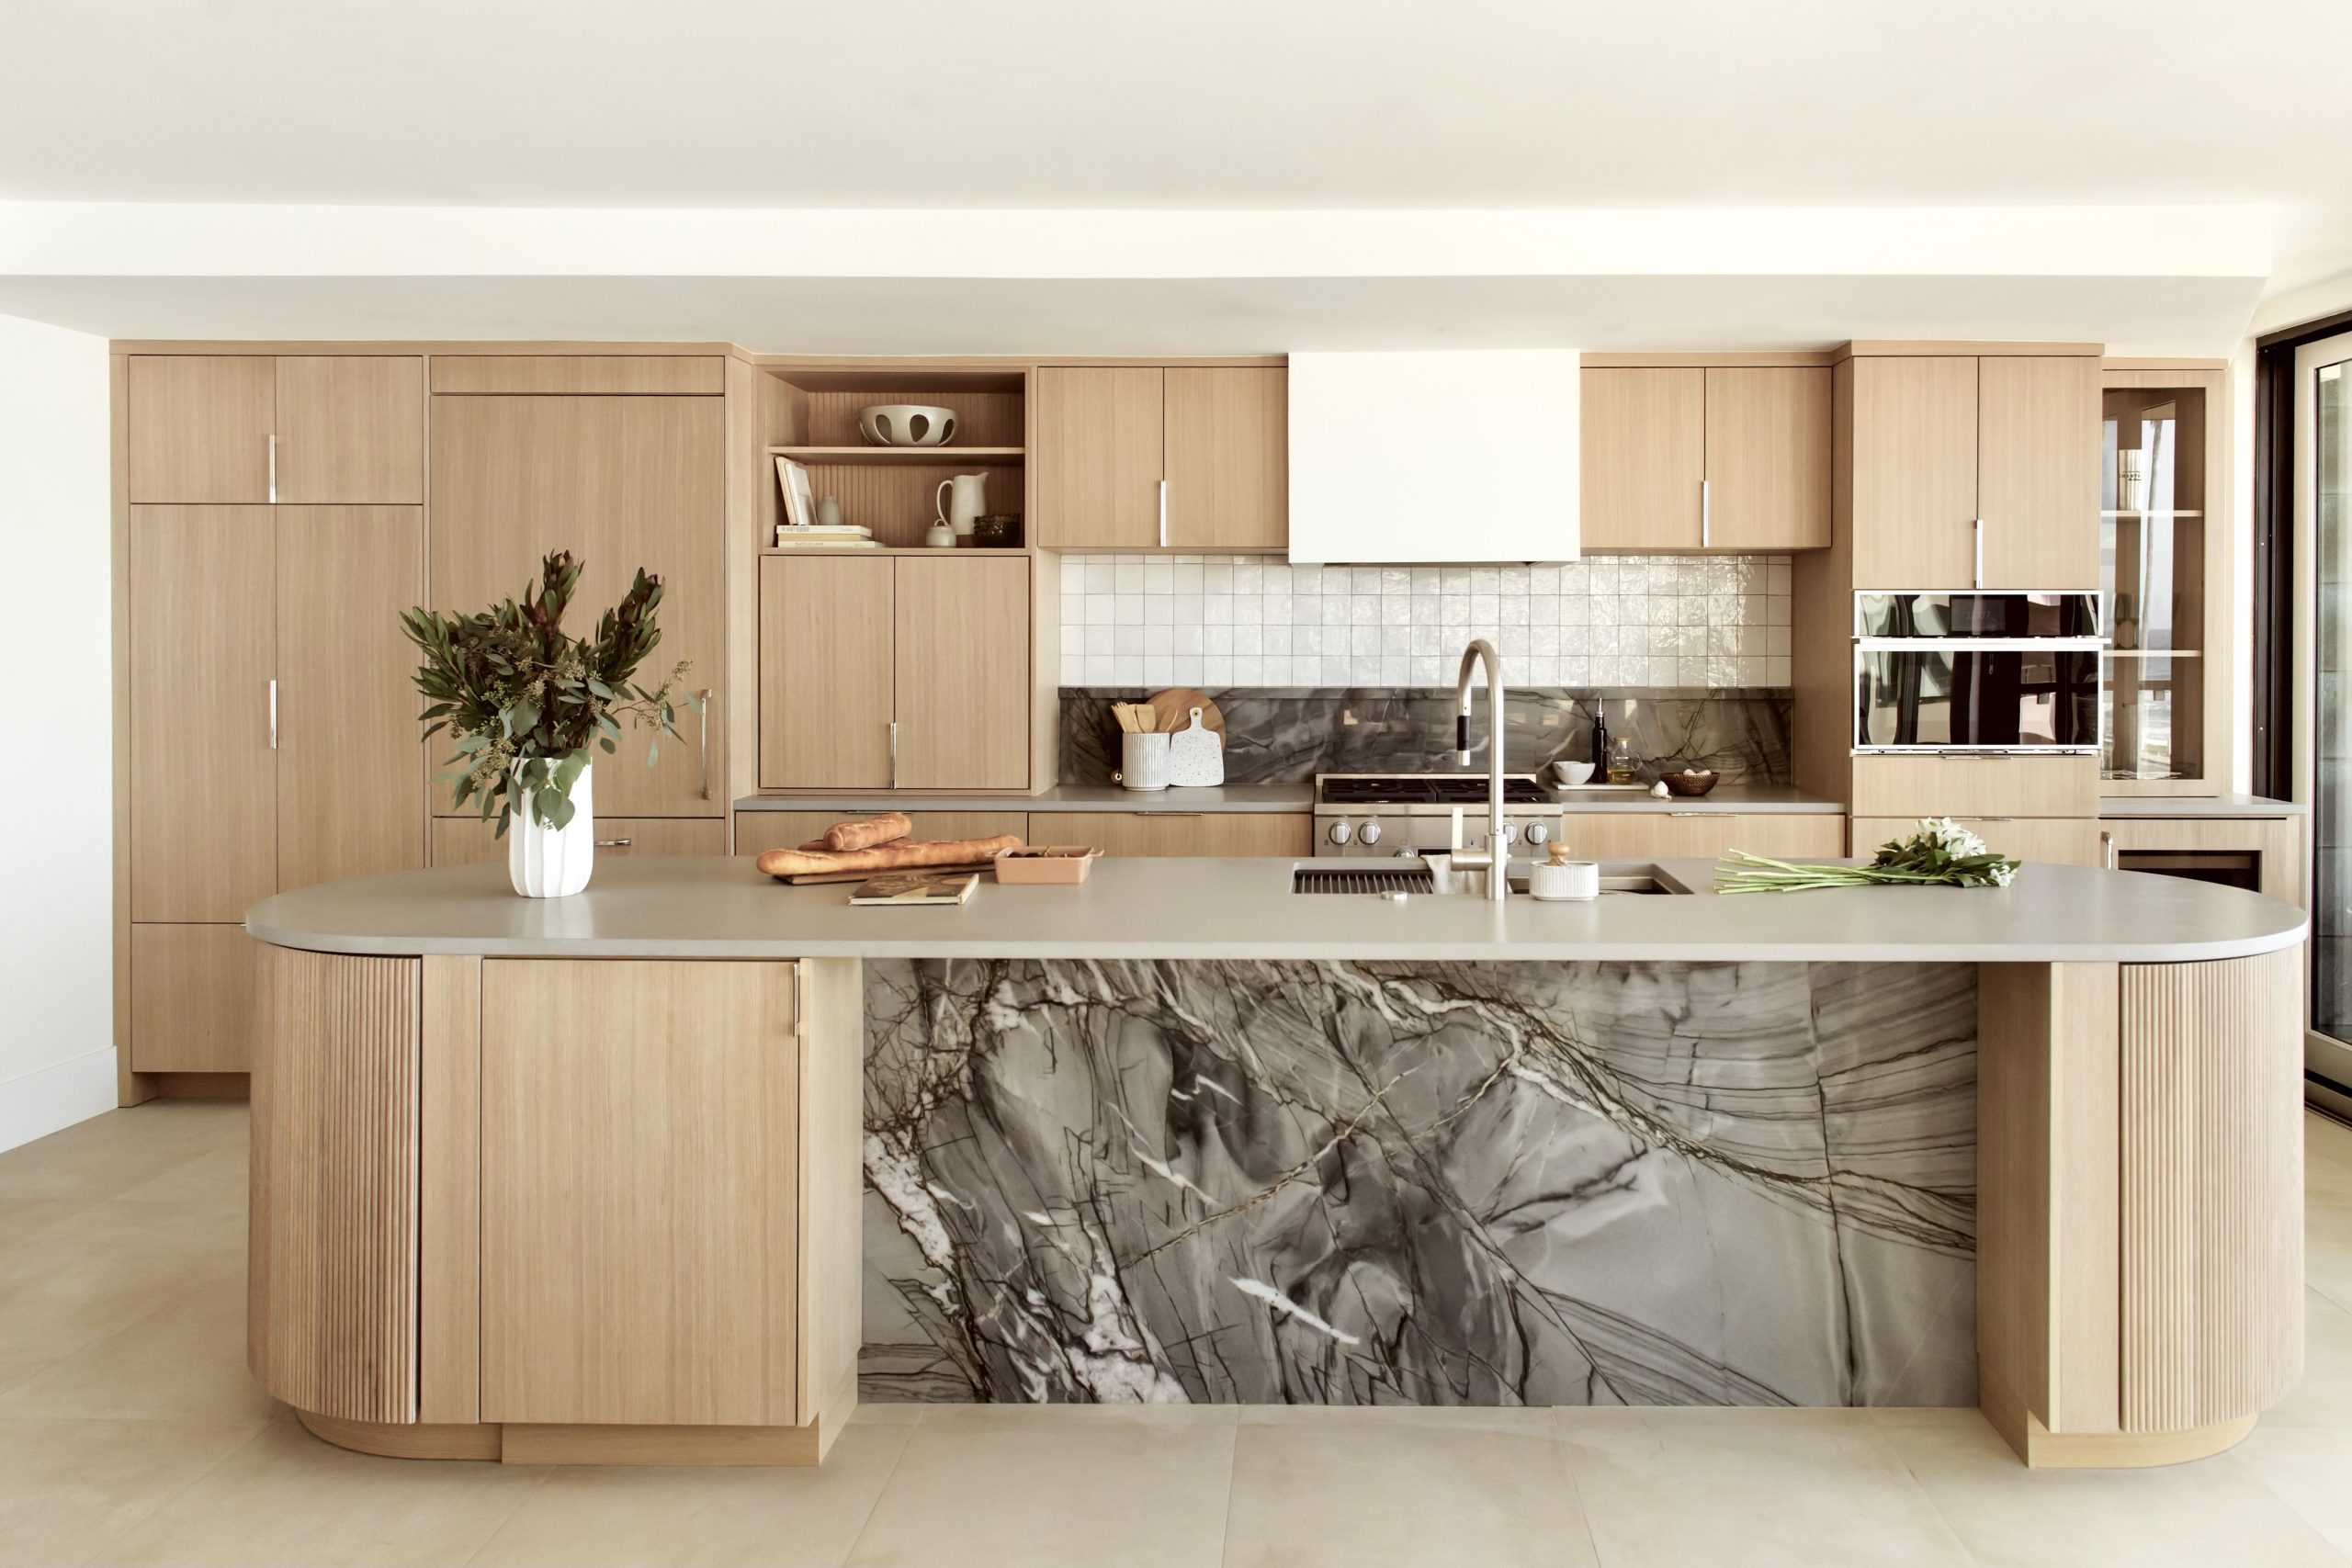 La Jolla Vacation Home kitchen renovation by Susan Wintersteen of San Diego design firm Savvy Interiors